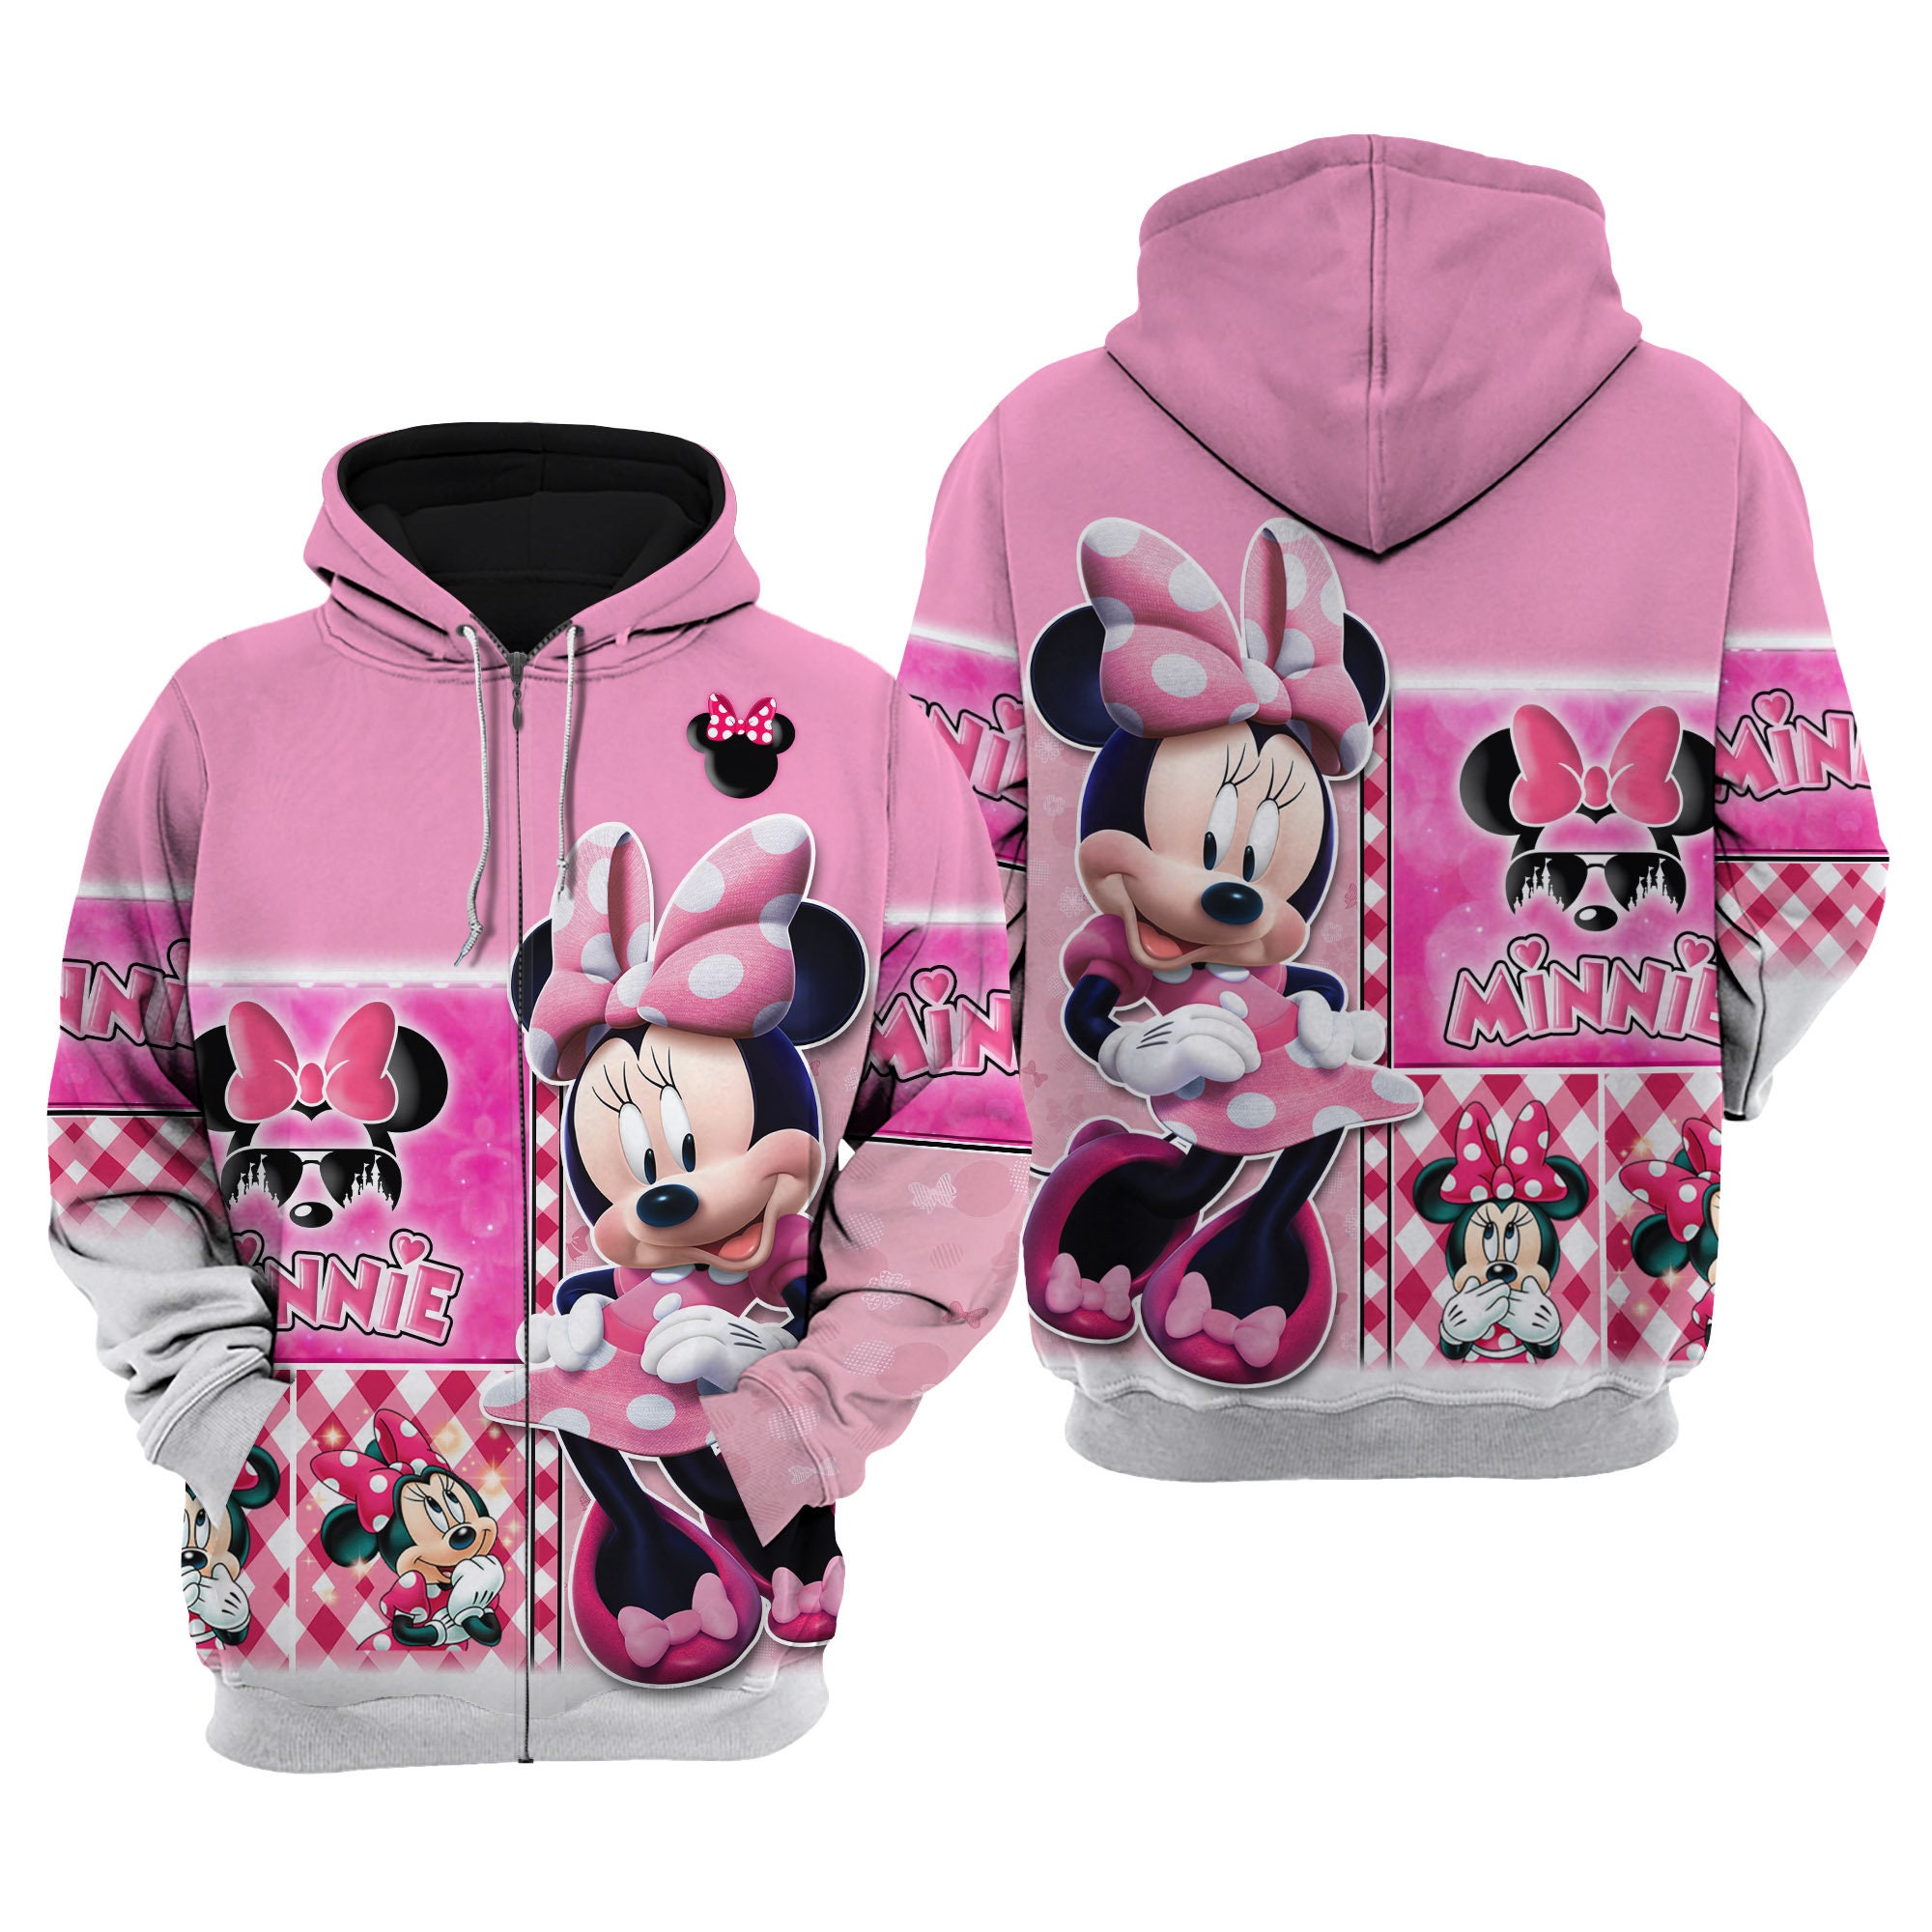 Minnie Mouse  Disney SweatshirtHoodieFleece Jacket  Stylist Unisex Cartoon Graphic Outfits  Clothing Men Women Kids Toddlers